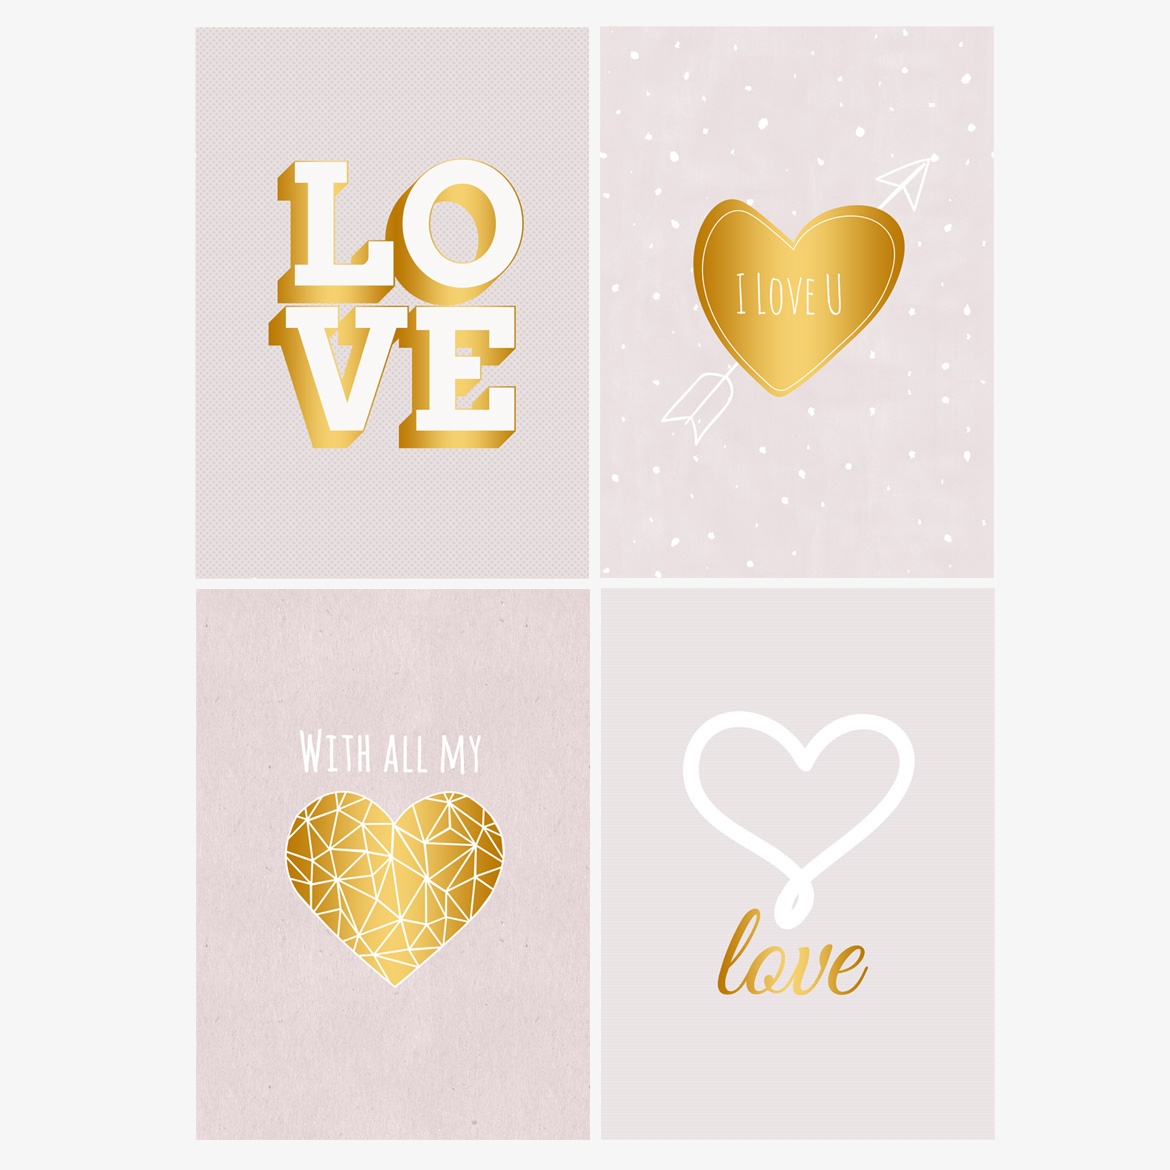 Love Greeting Cards – Free Printables! - Belivindesign - Free Printable Love Greeting Cards